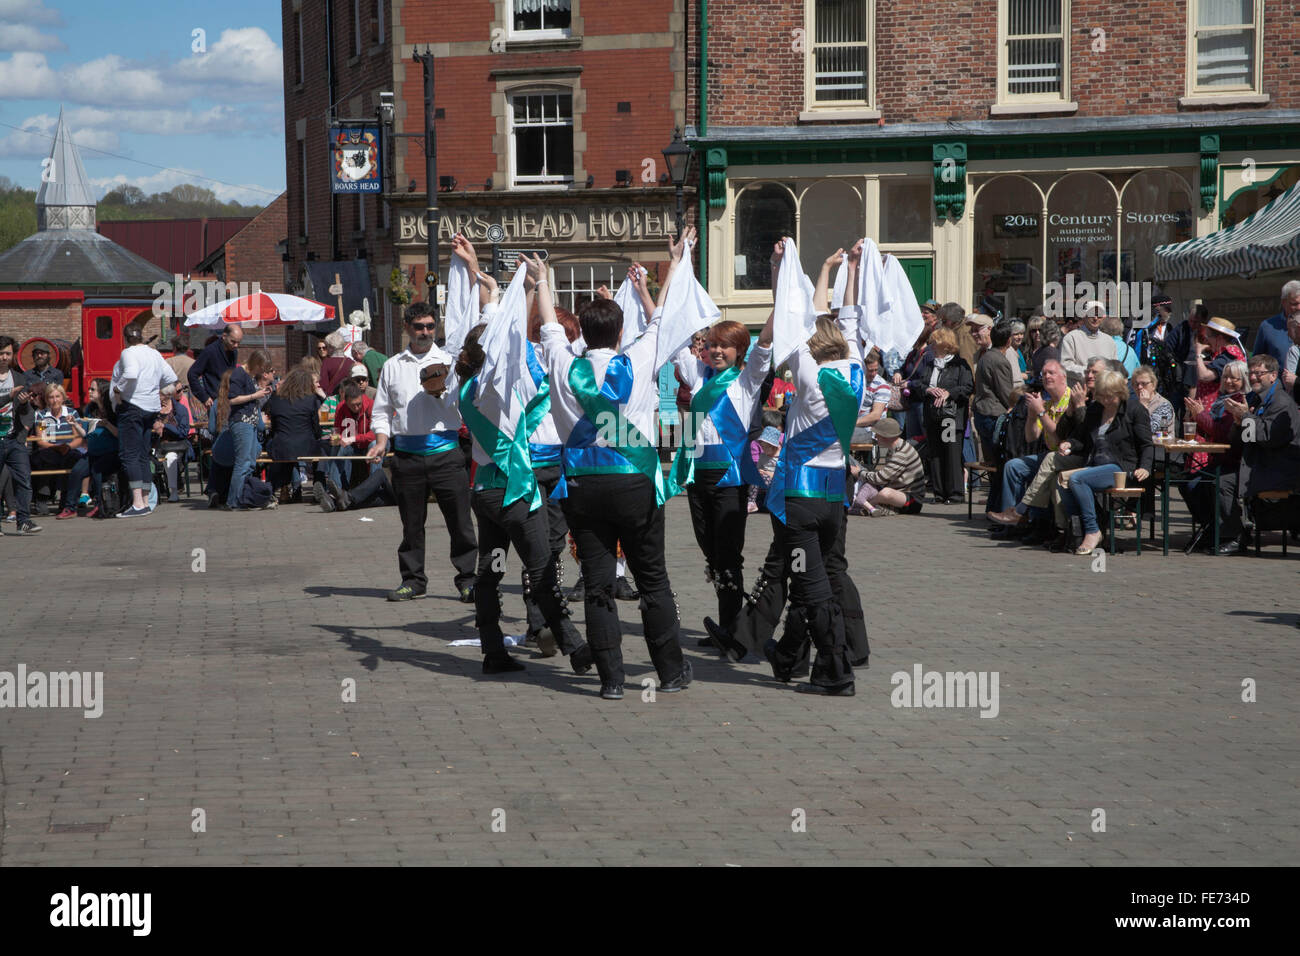 Donna Morris Dancing Gruppo Stockport Folk Festival 2015 Stockport cheshire england Foto Stock